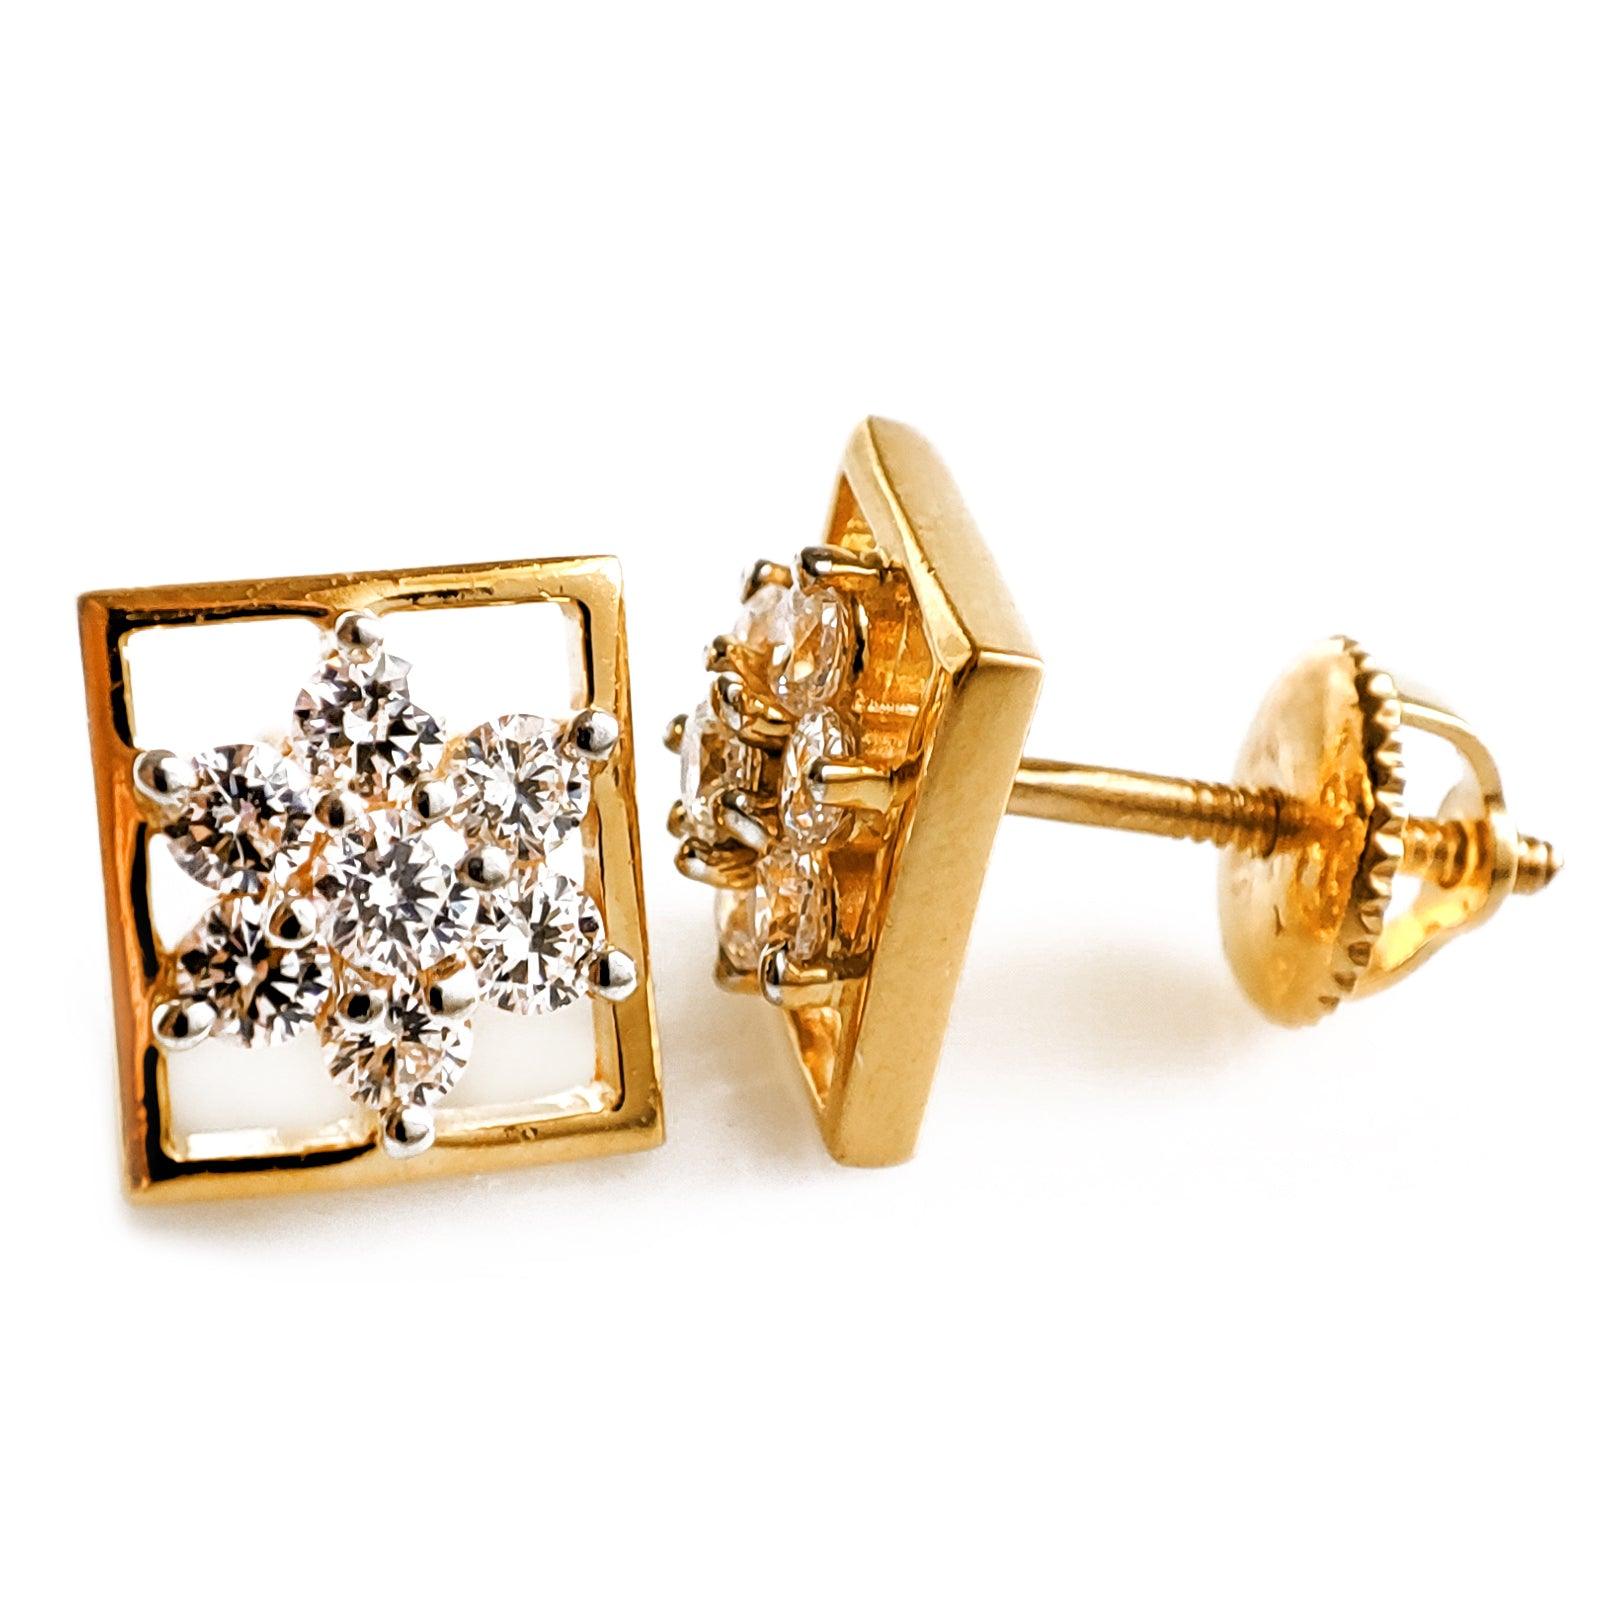 22ct Gold Stud Earrings set with Swarovski Zirconias in a flower design ET7306